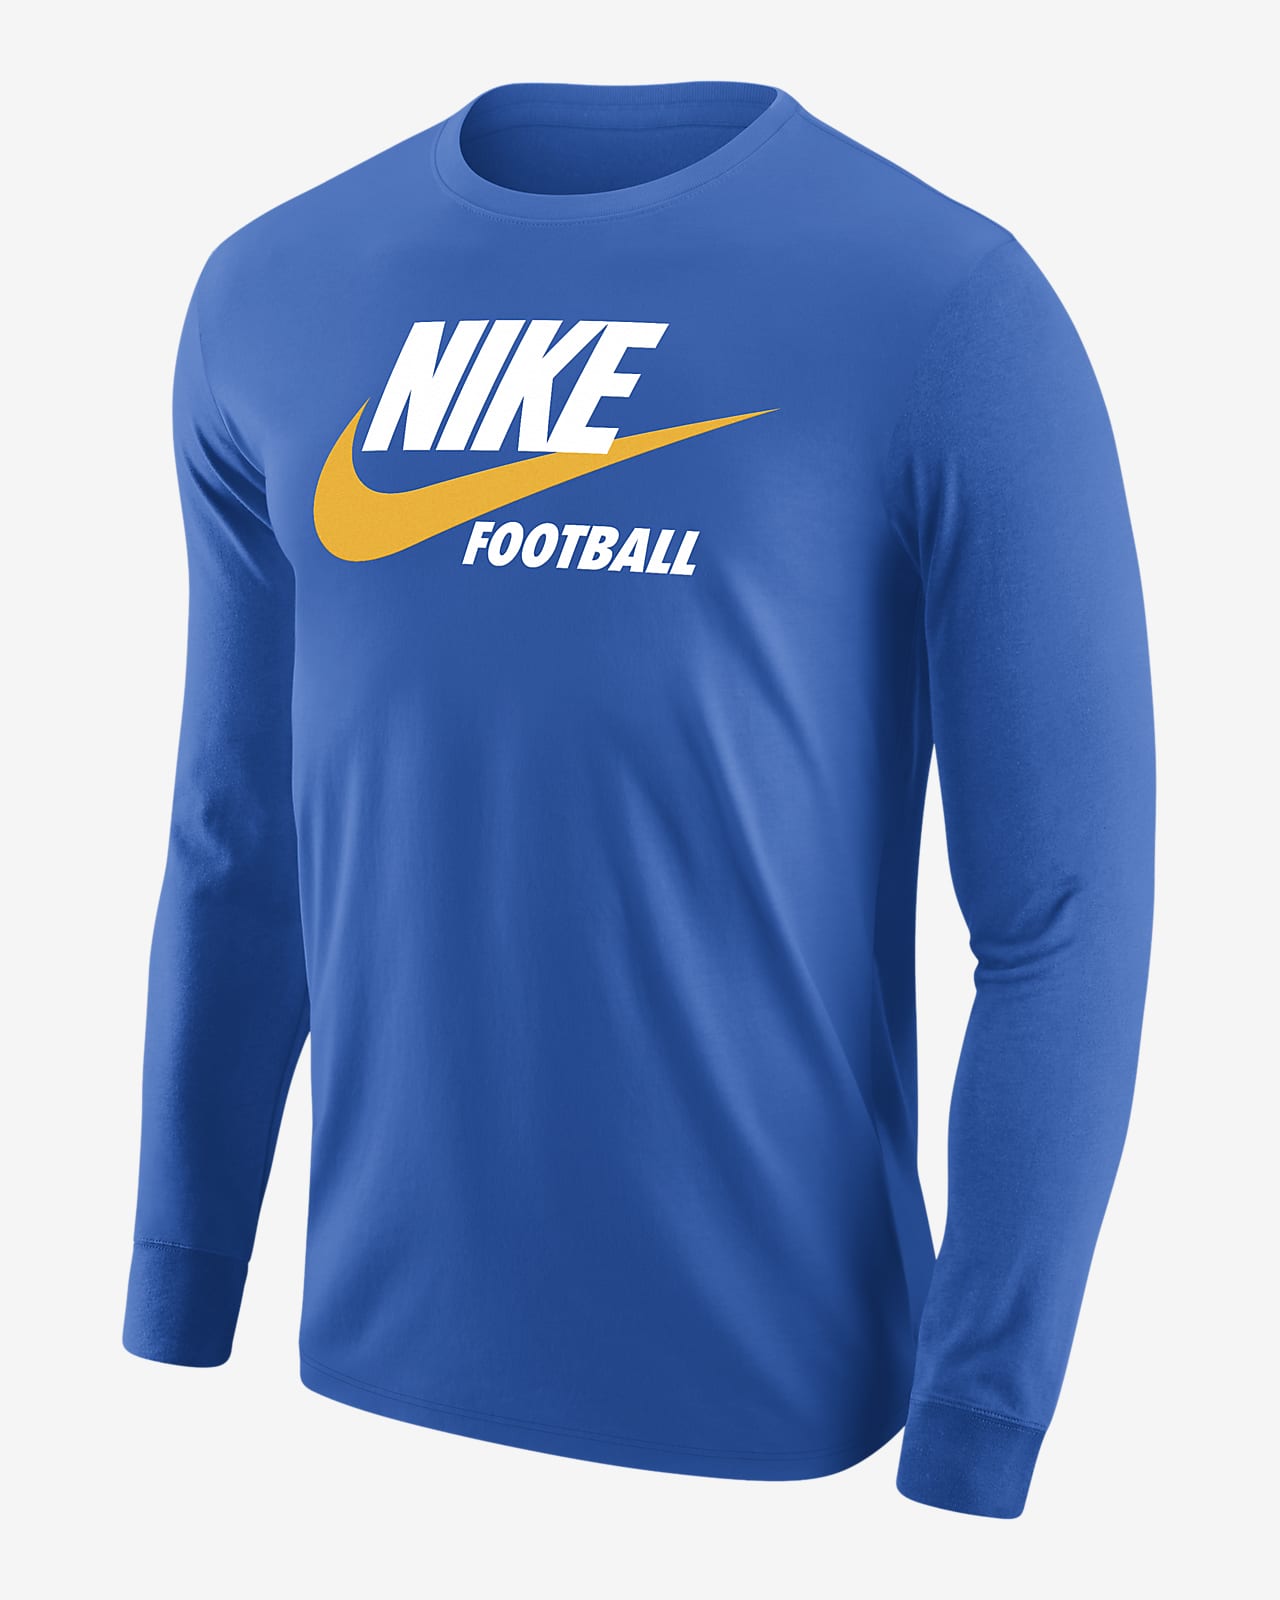 Nike Football Men's Long-Sleeve T-Shirt